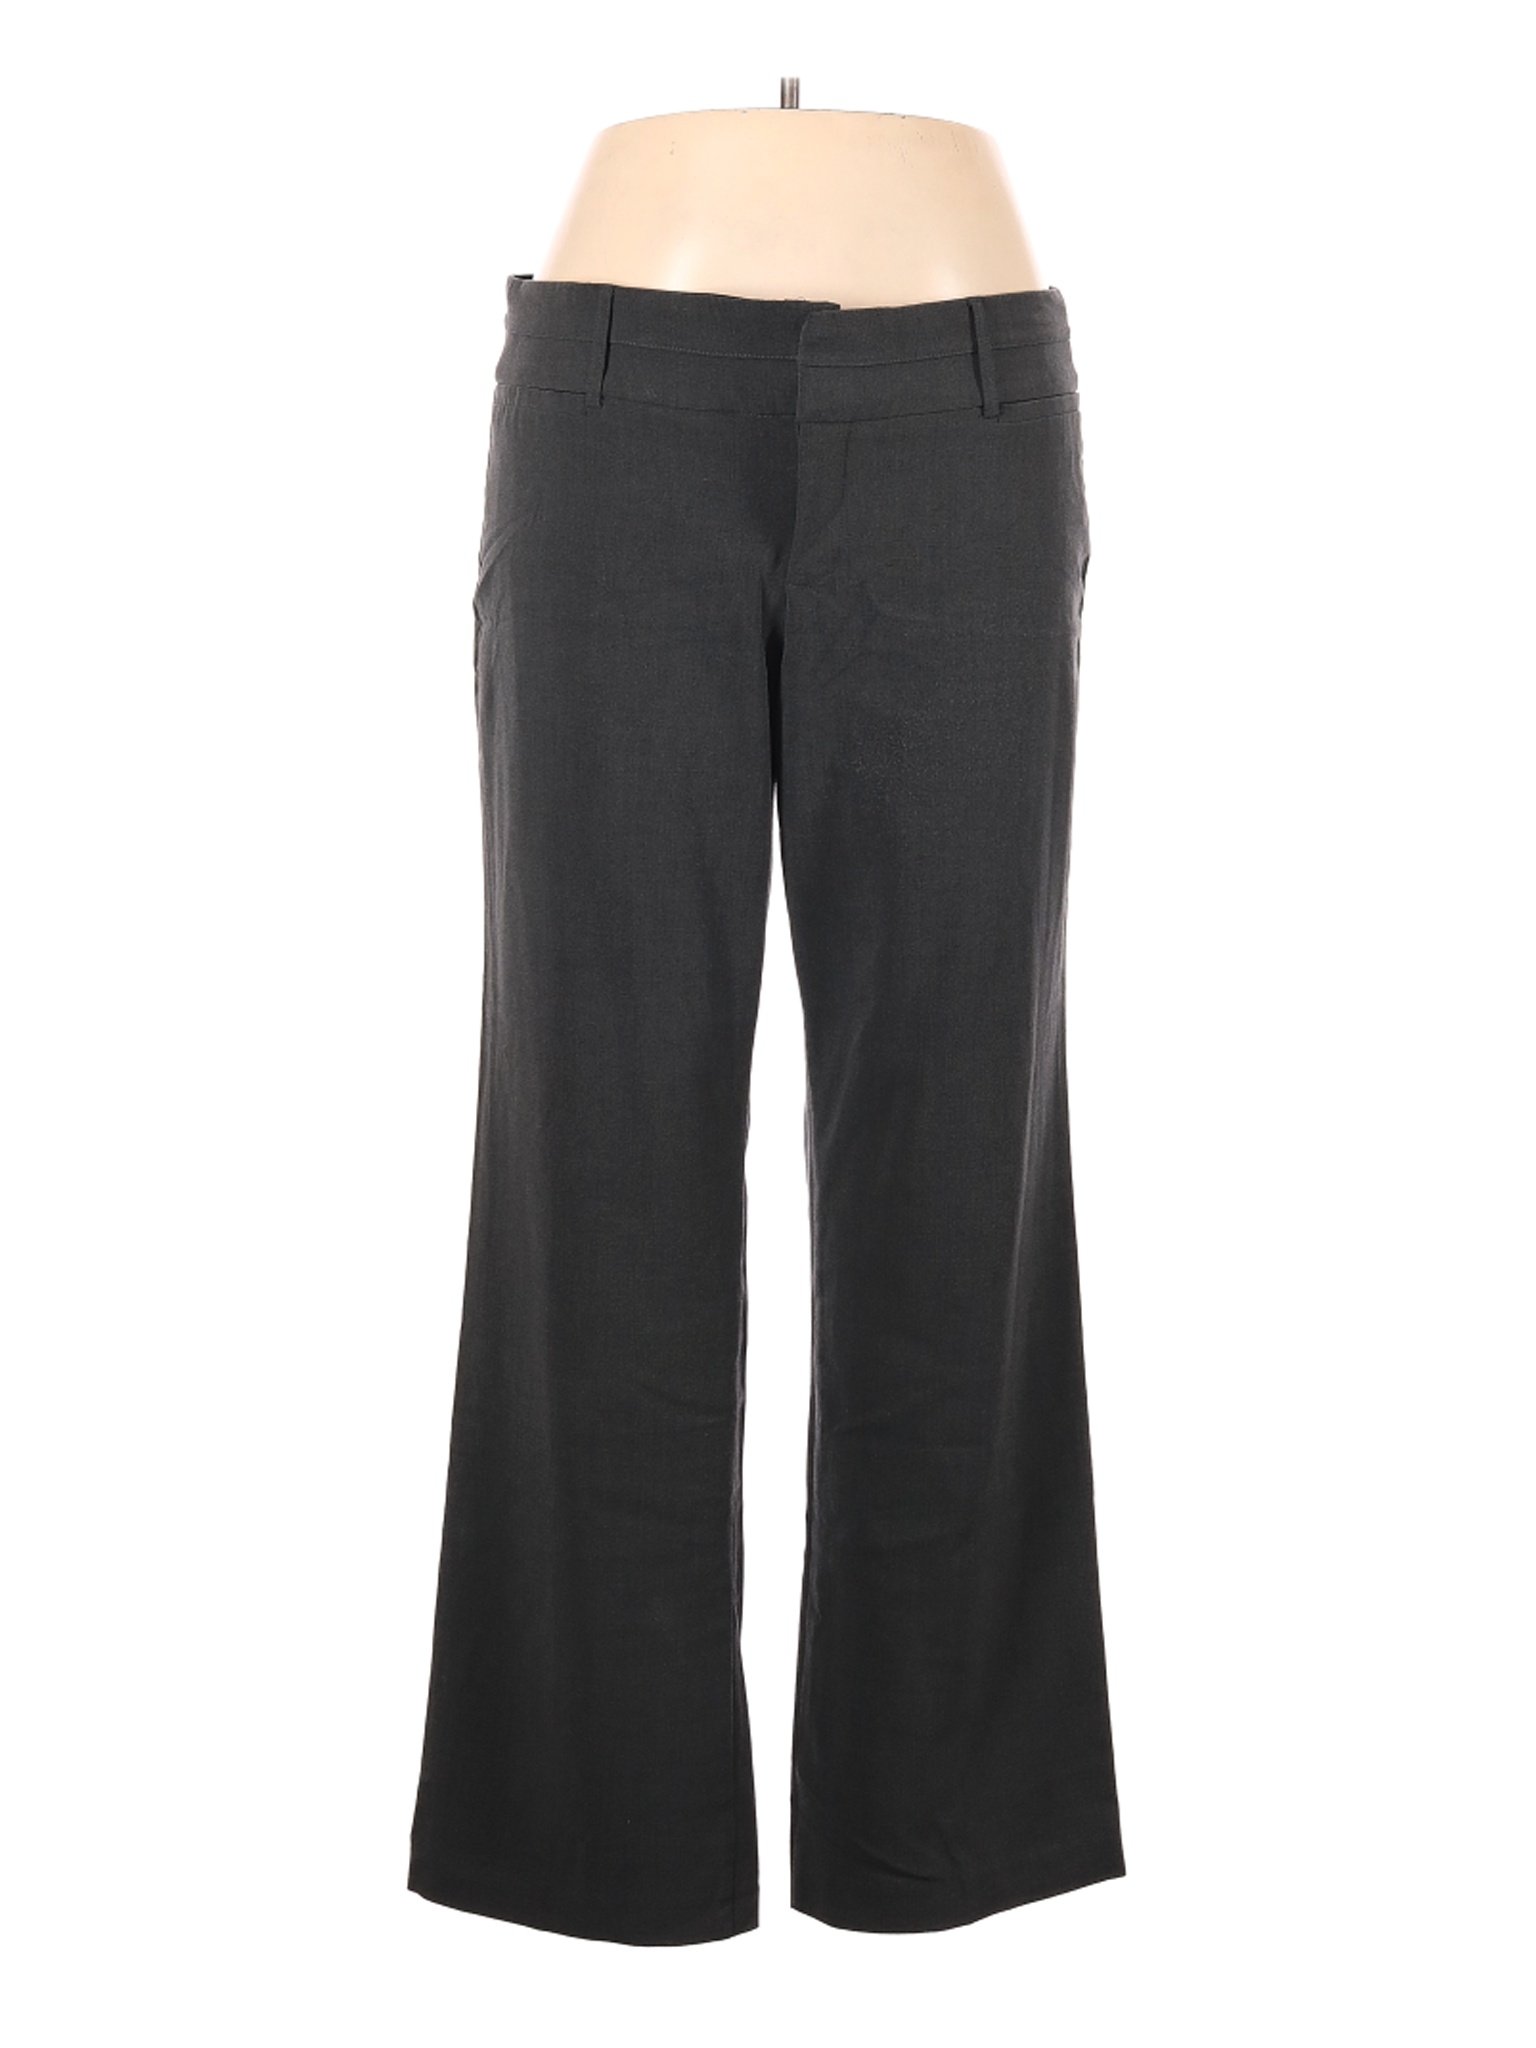 AB Studio Women Black Dress Pants 16 | eBay